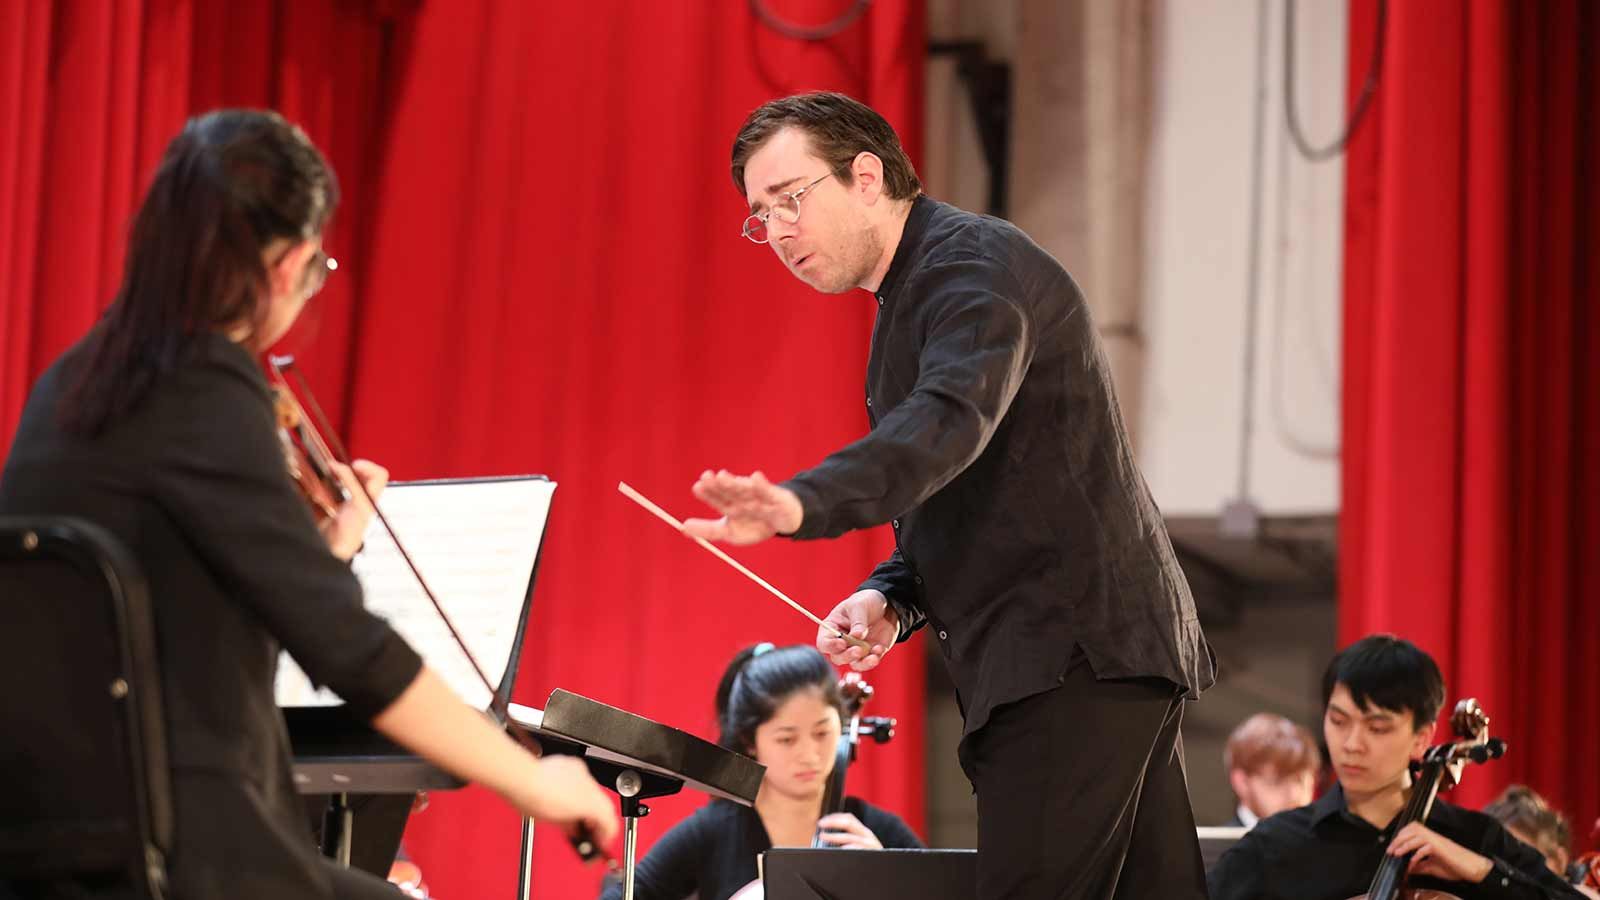 david fulmer conducting